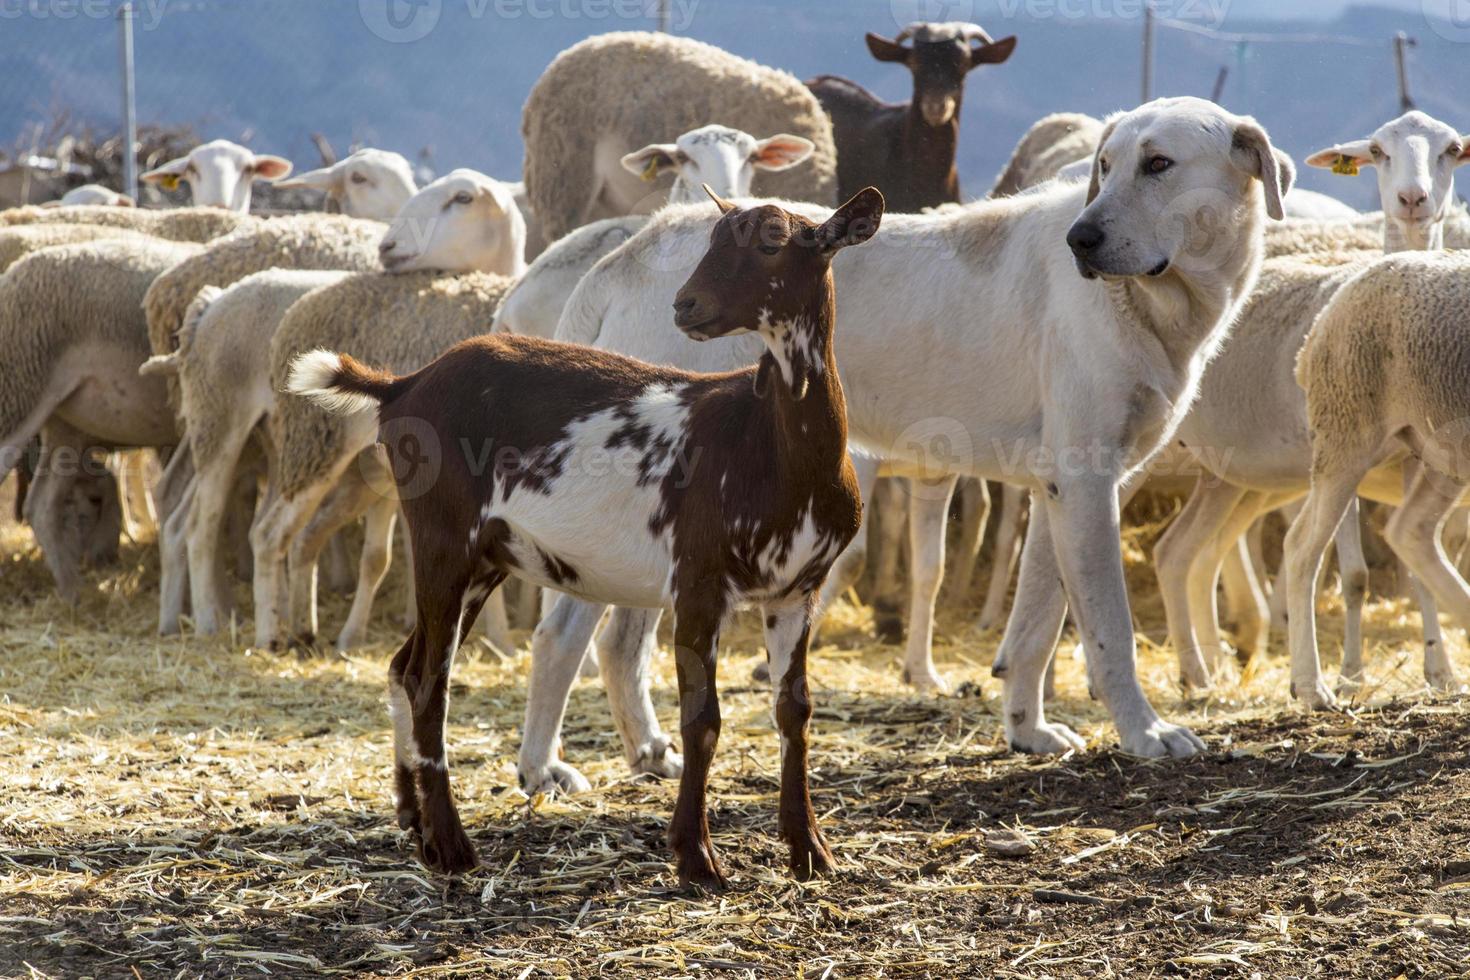 herd on the farm, goat, dog and sheep, animals farm photo